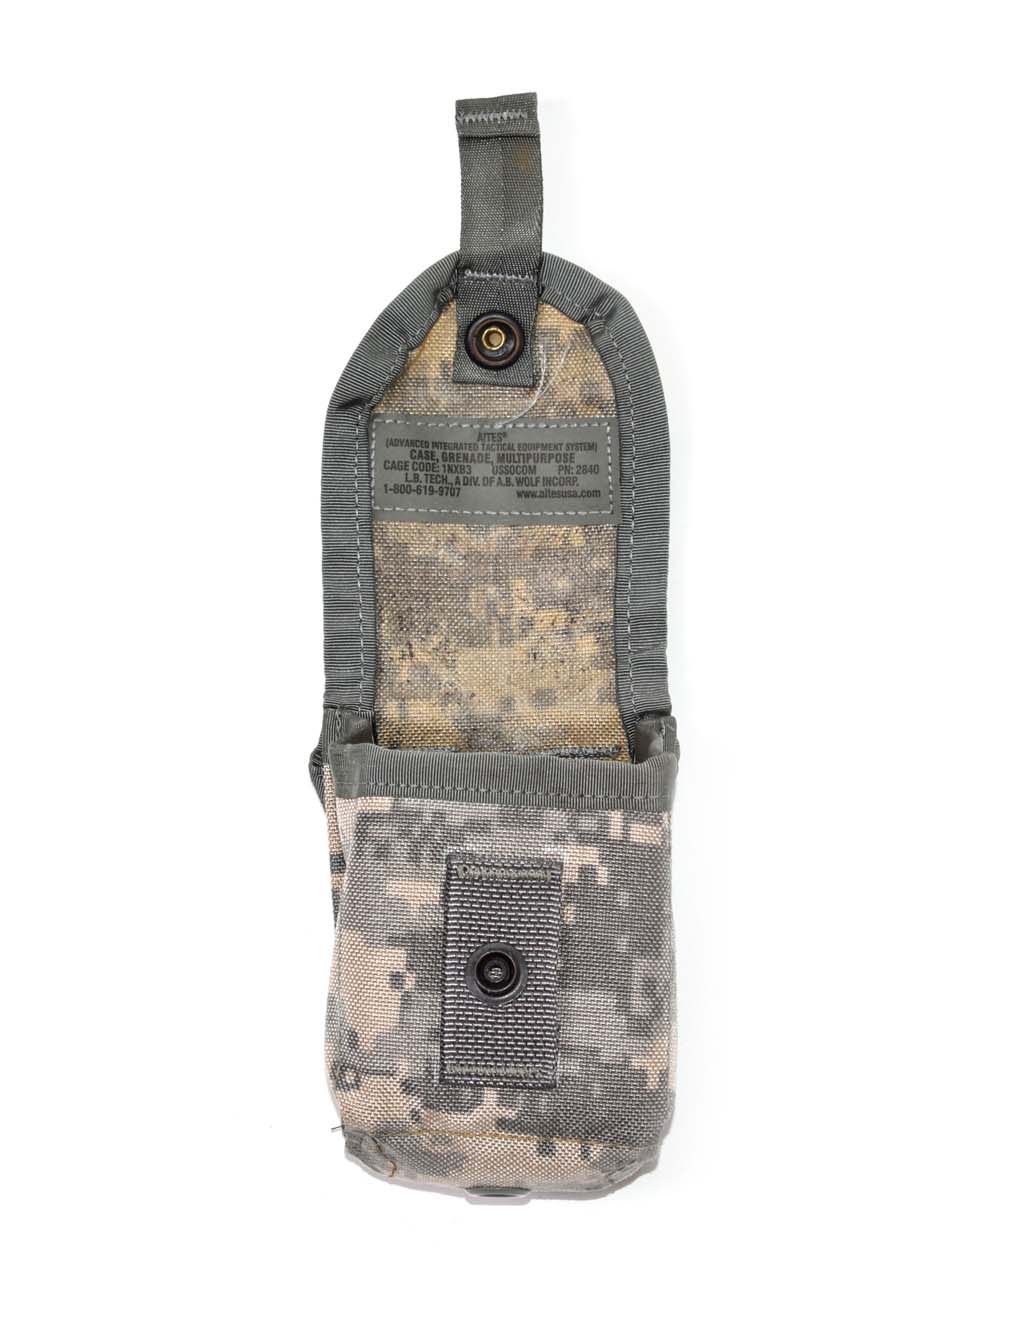 Подсумок гранатный Grenade Multipurpose MOLLE acu США